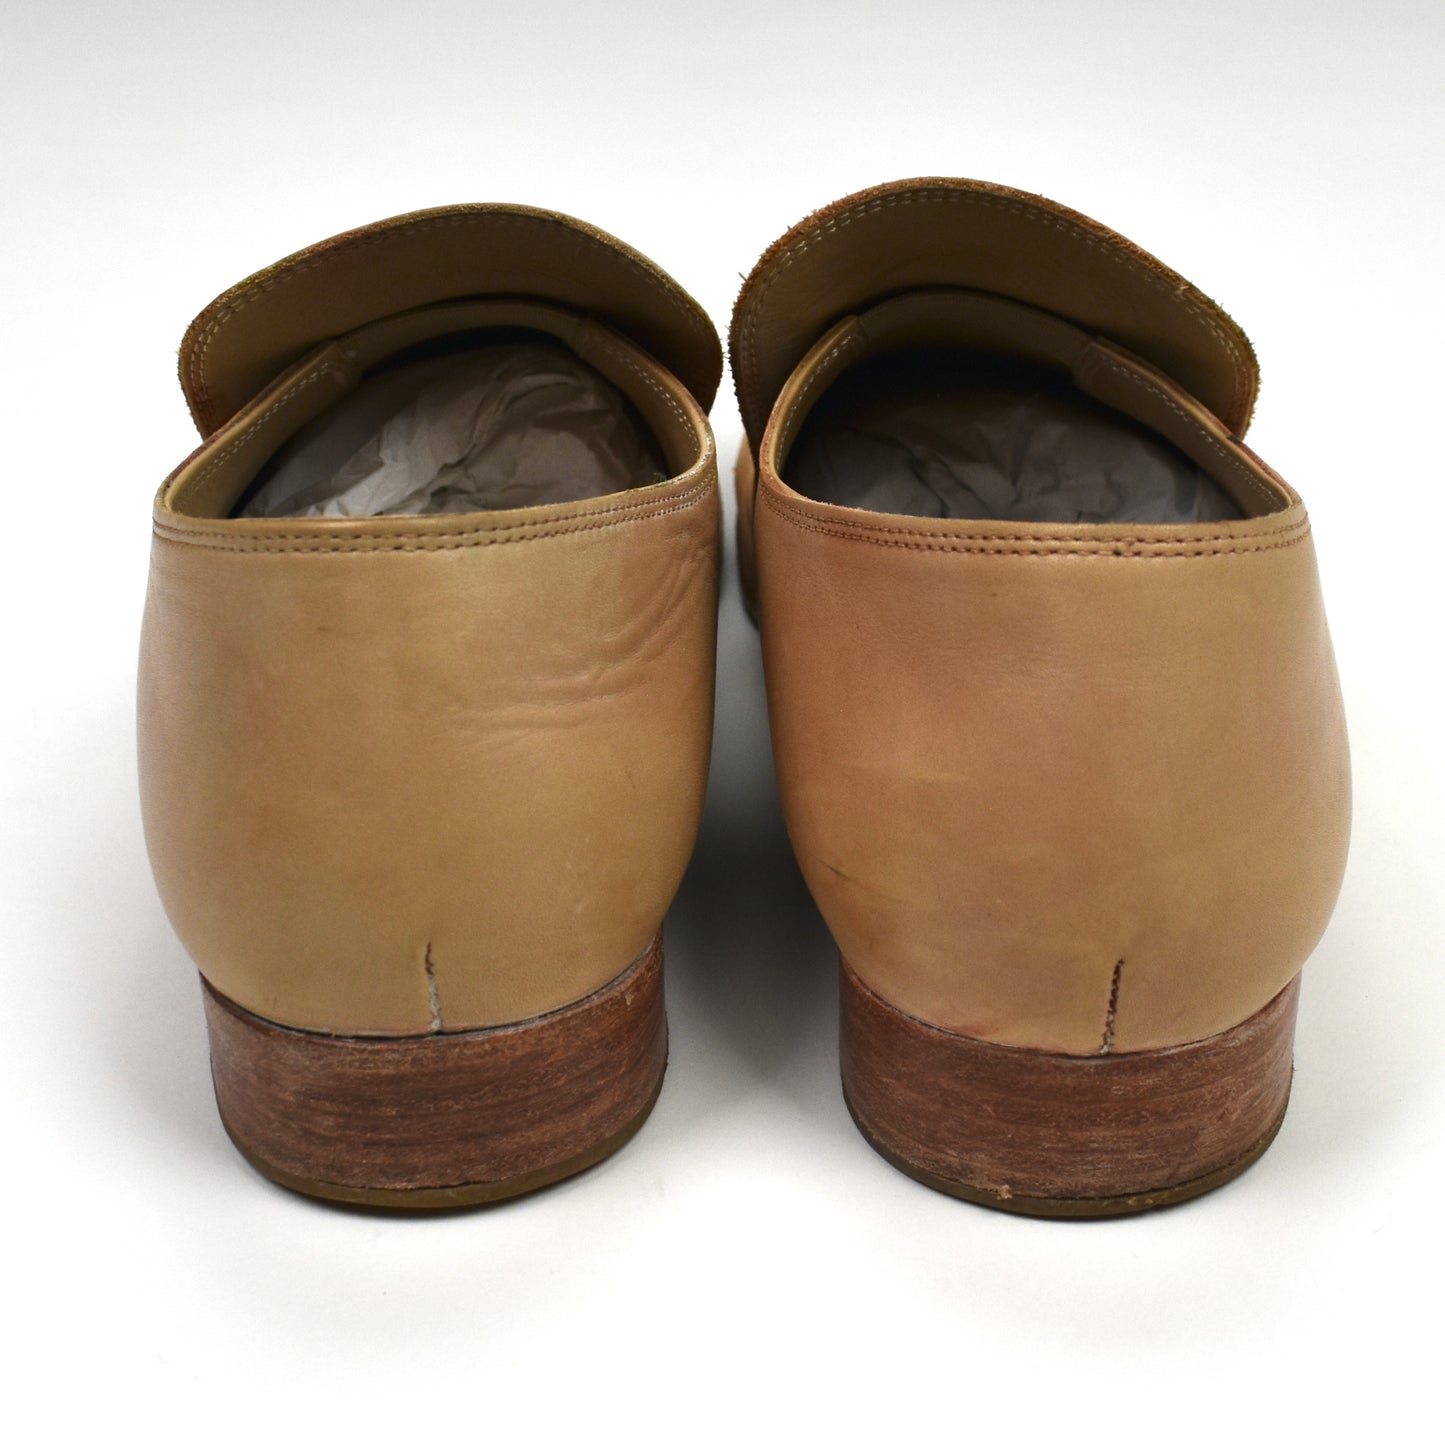 Maison Margiela x H&M - Tan Leather Mould Effect Loafers